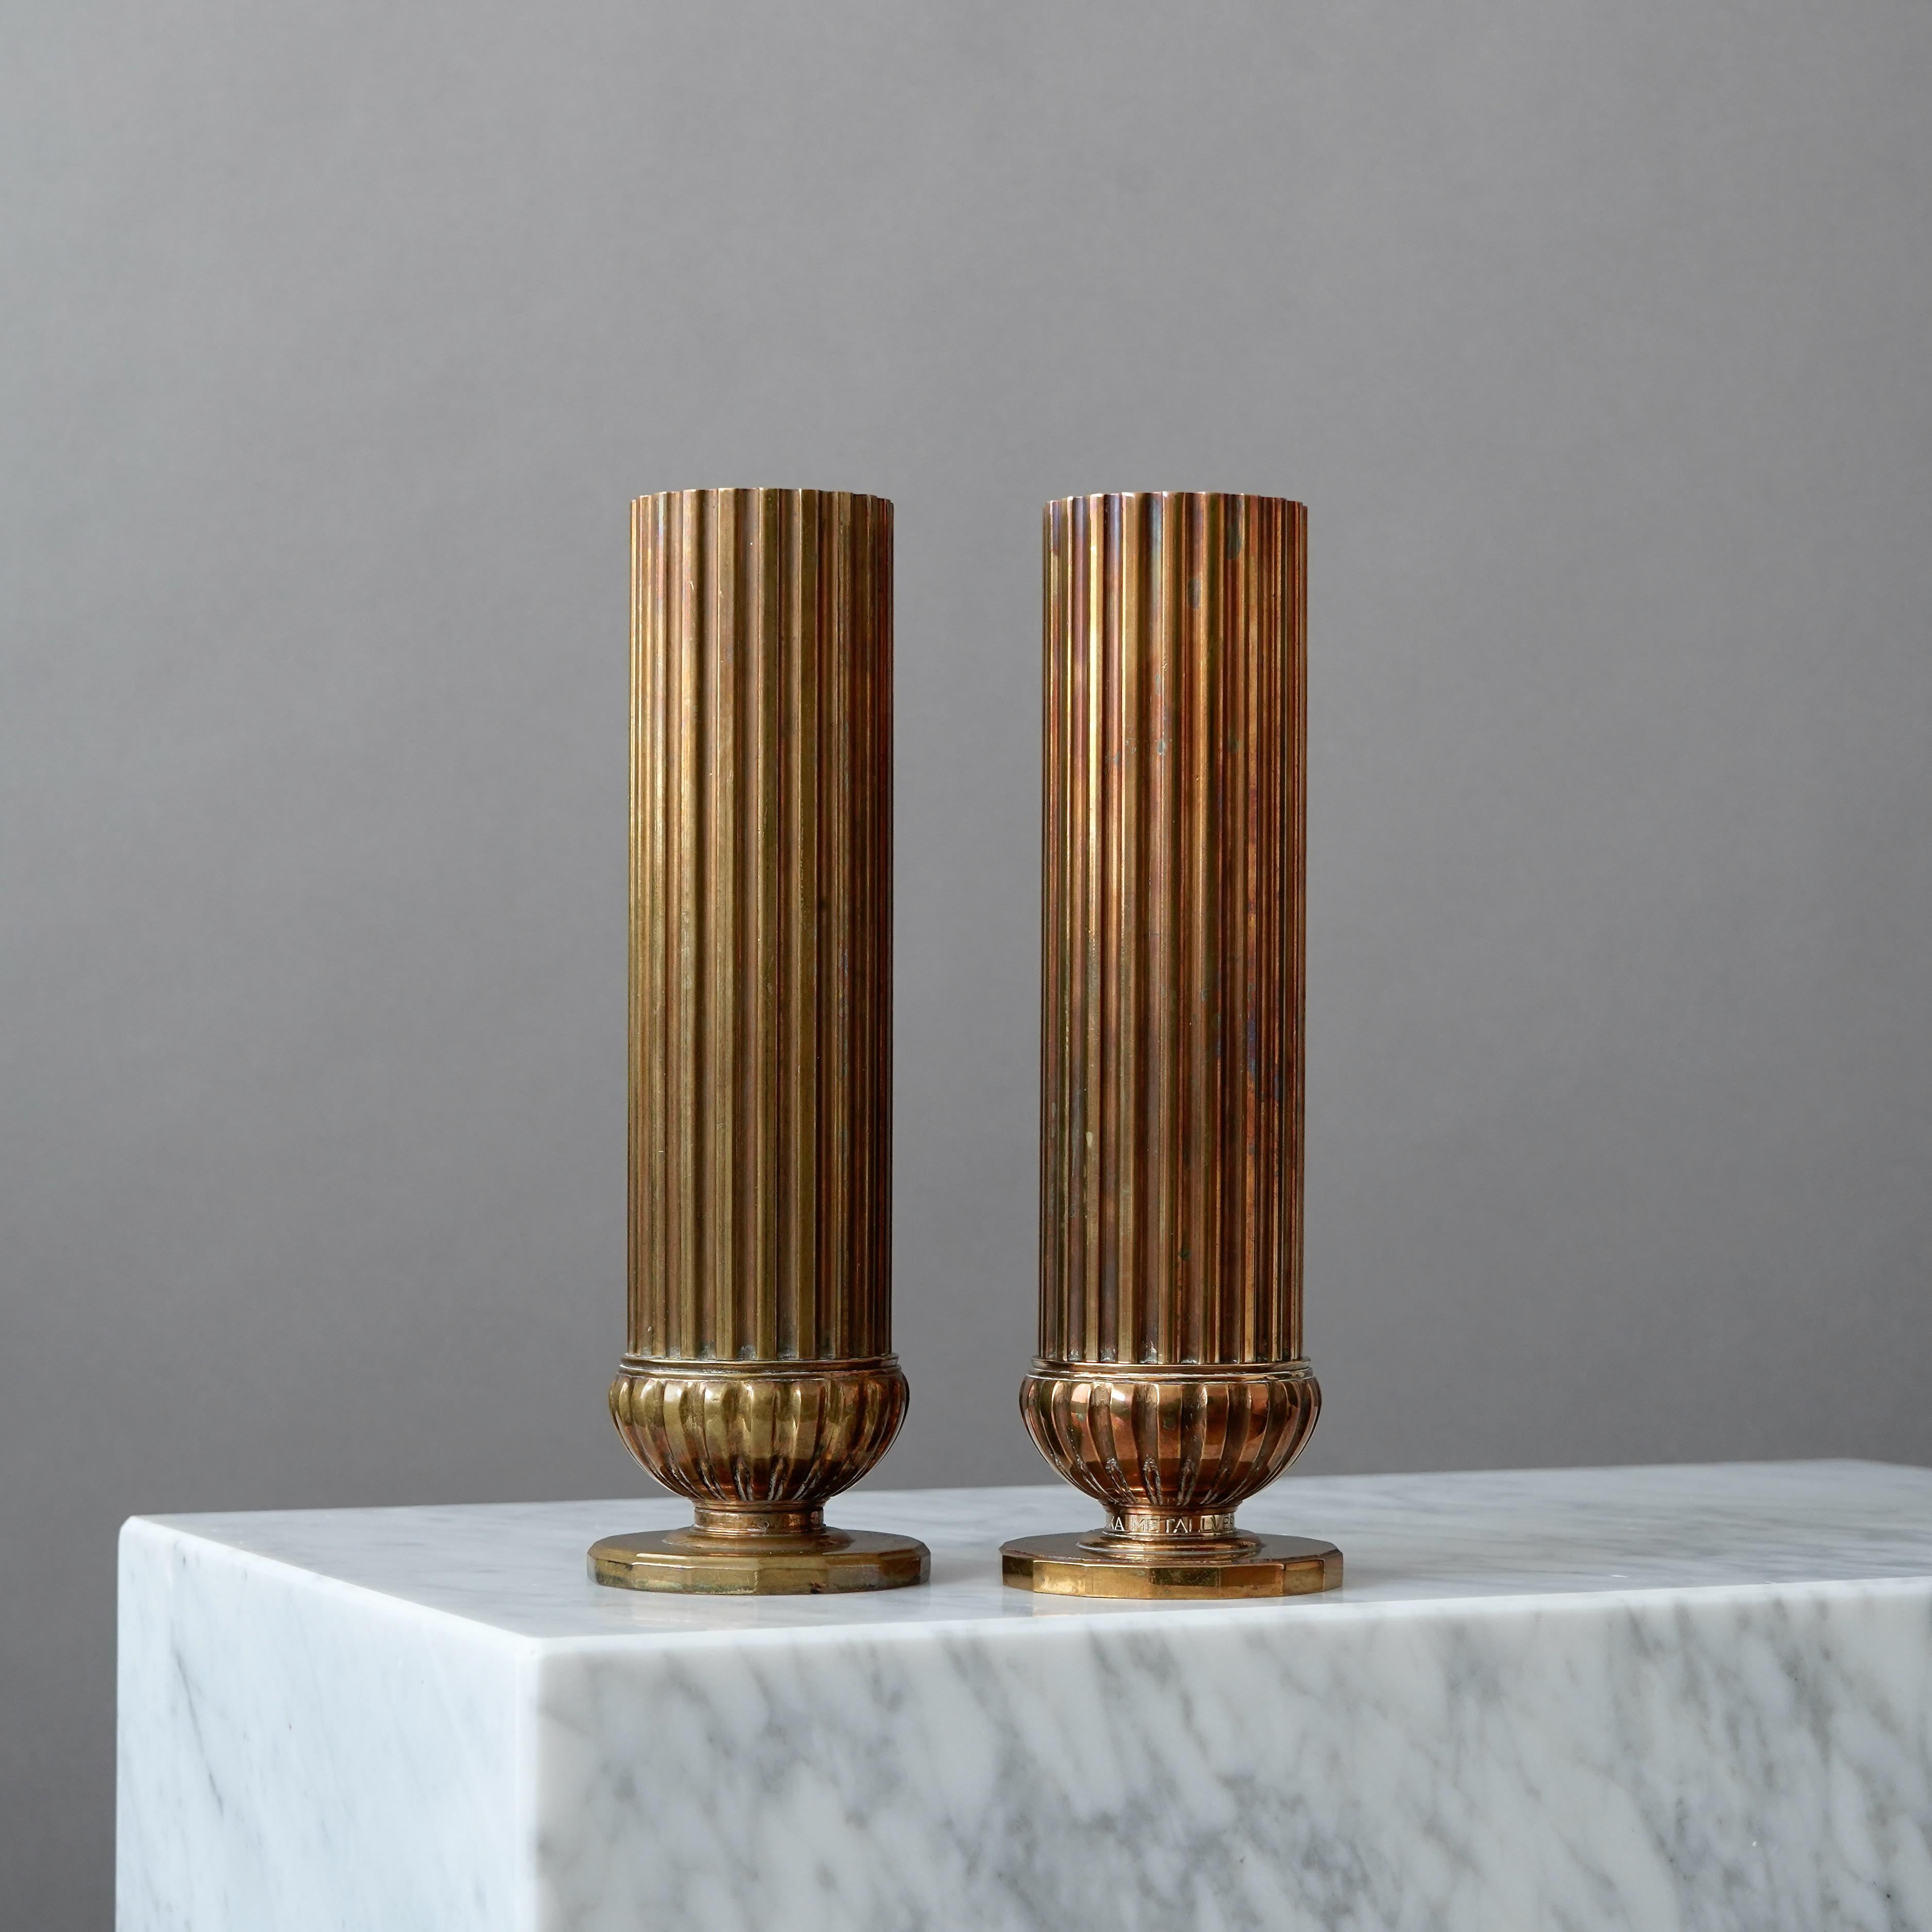 A pair of Bronze Art Deco Vases by SVM Handarbete, Sweden, 1930s For Sale 1